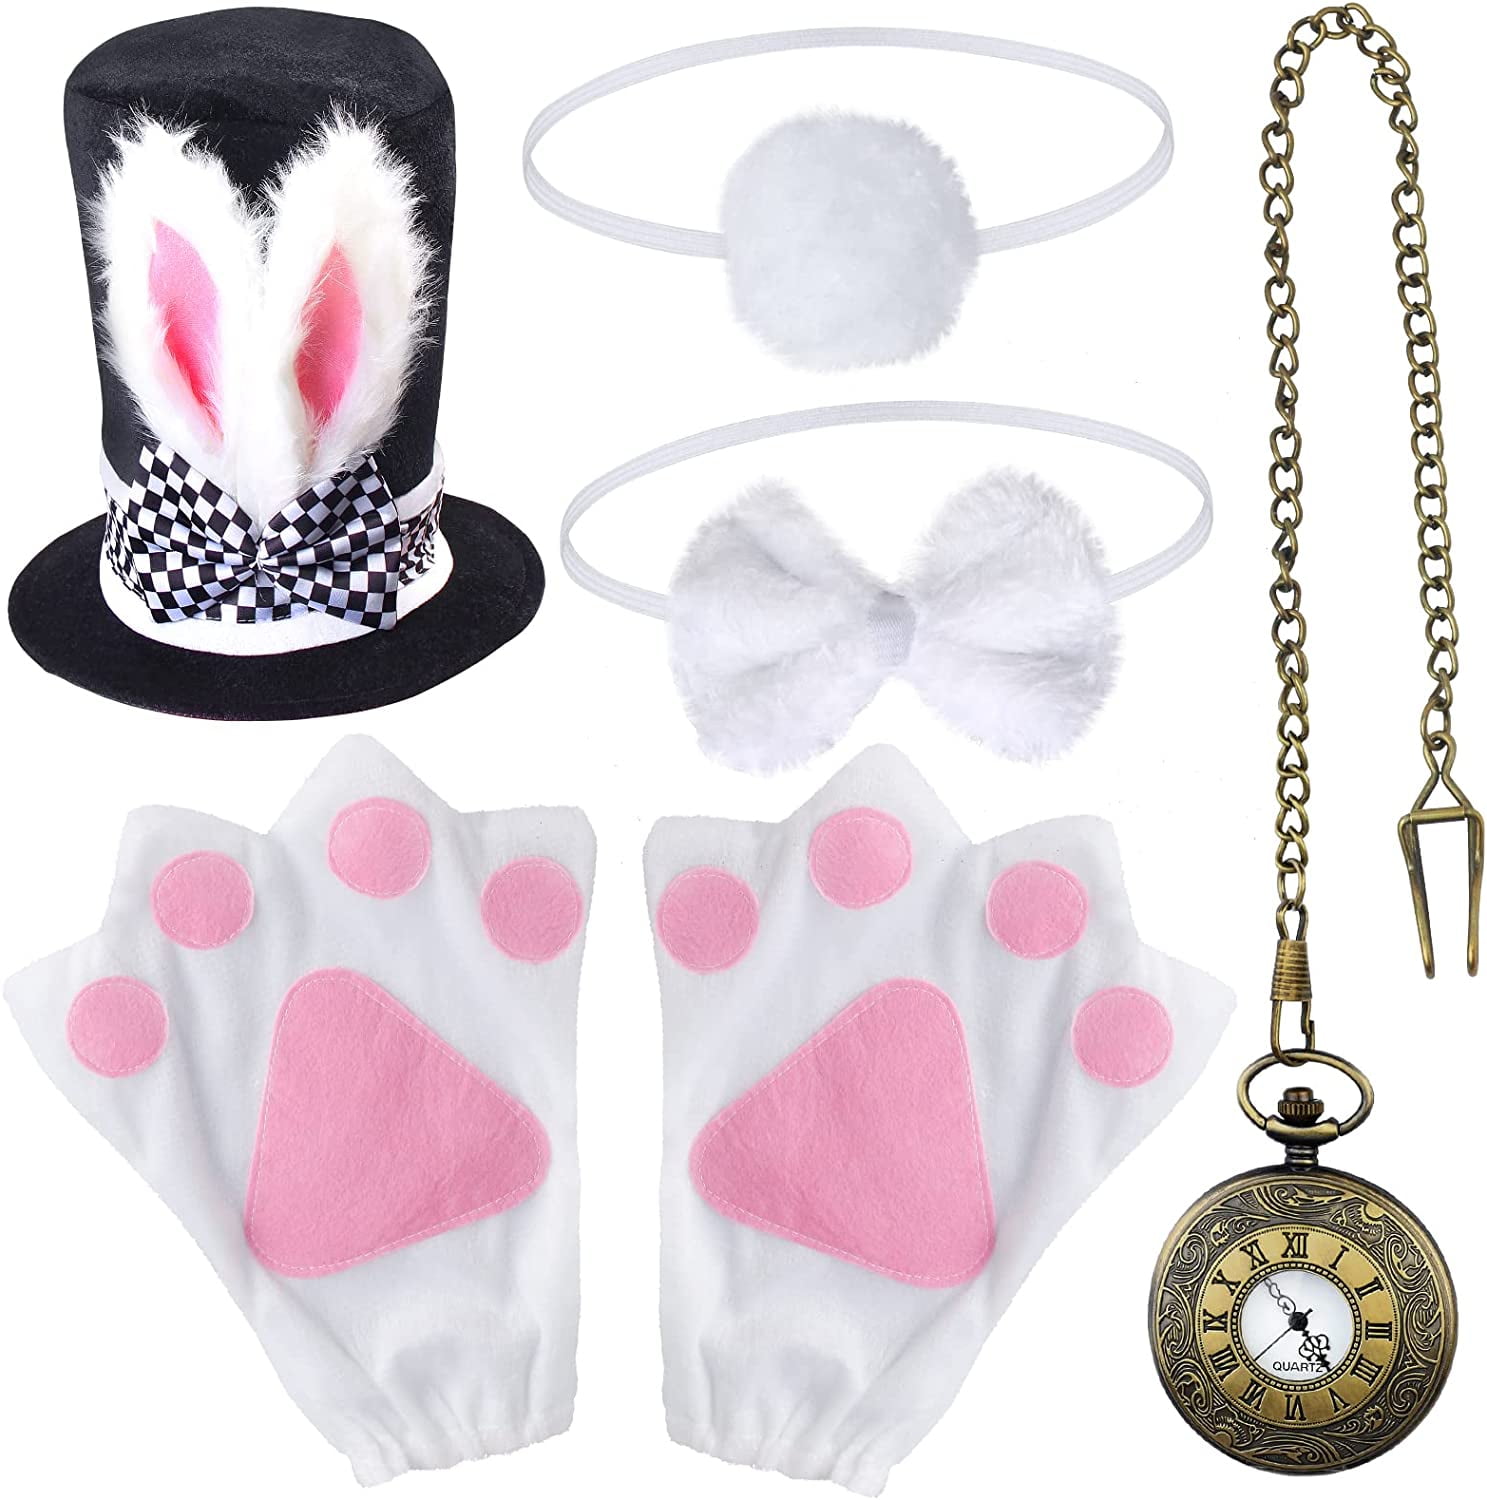 Brybelly Wonderland Rabbit Costume Accessory Kit